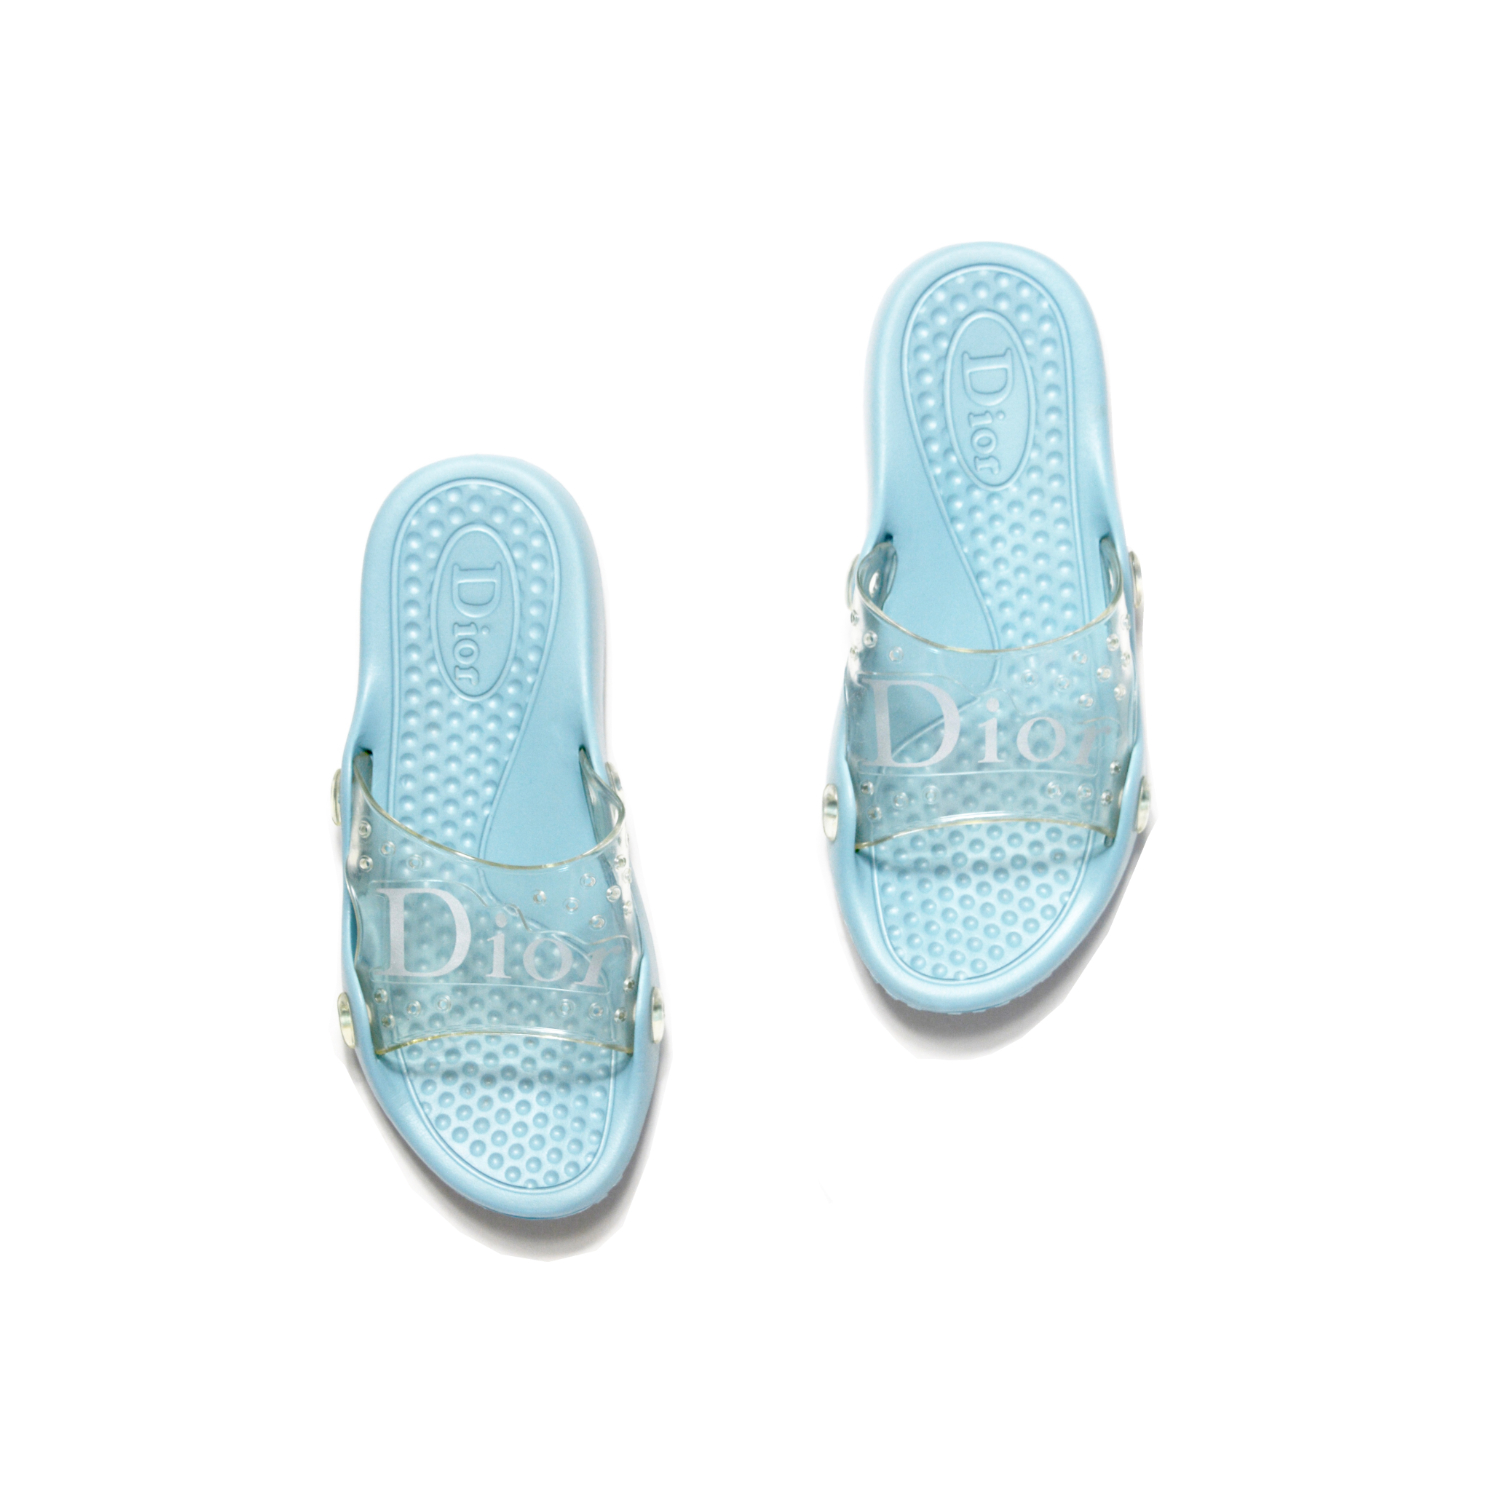 Dior Sliders in Baby Blue Size 3 | NITRYL